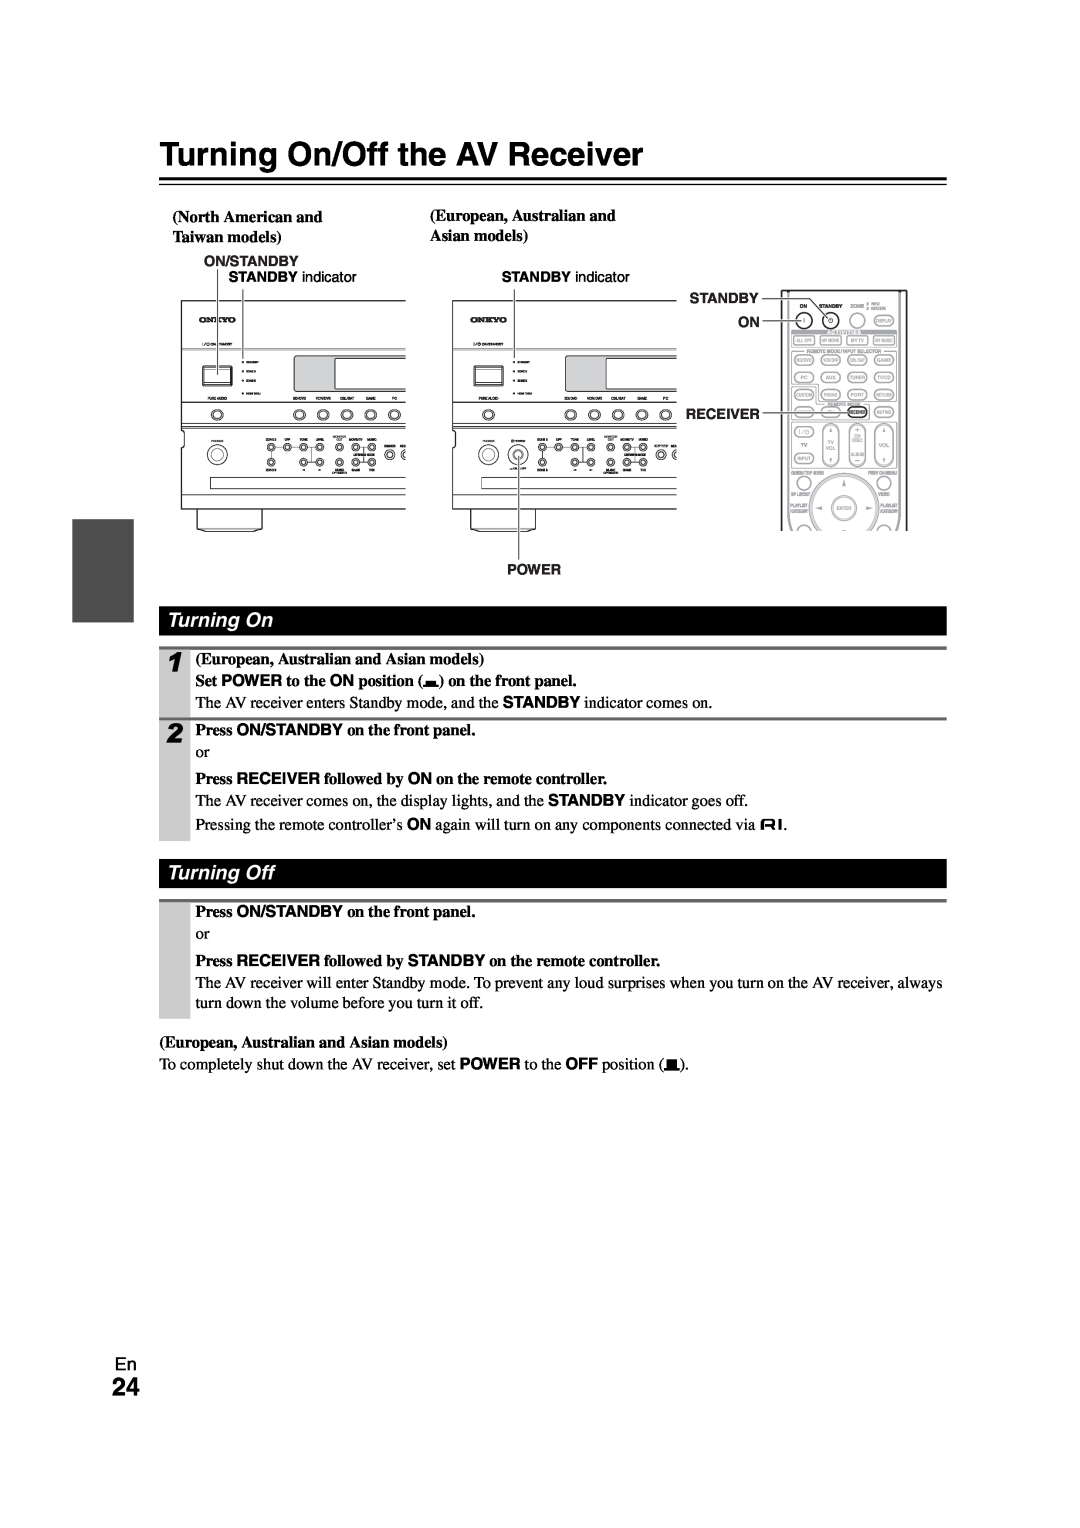 Onkyo TX-NR808 instruction manual Turning On/Off the AV Receiver, Turning Off 